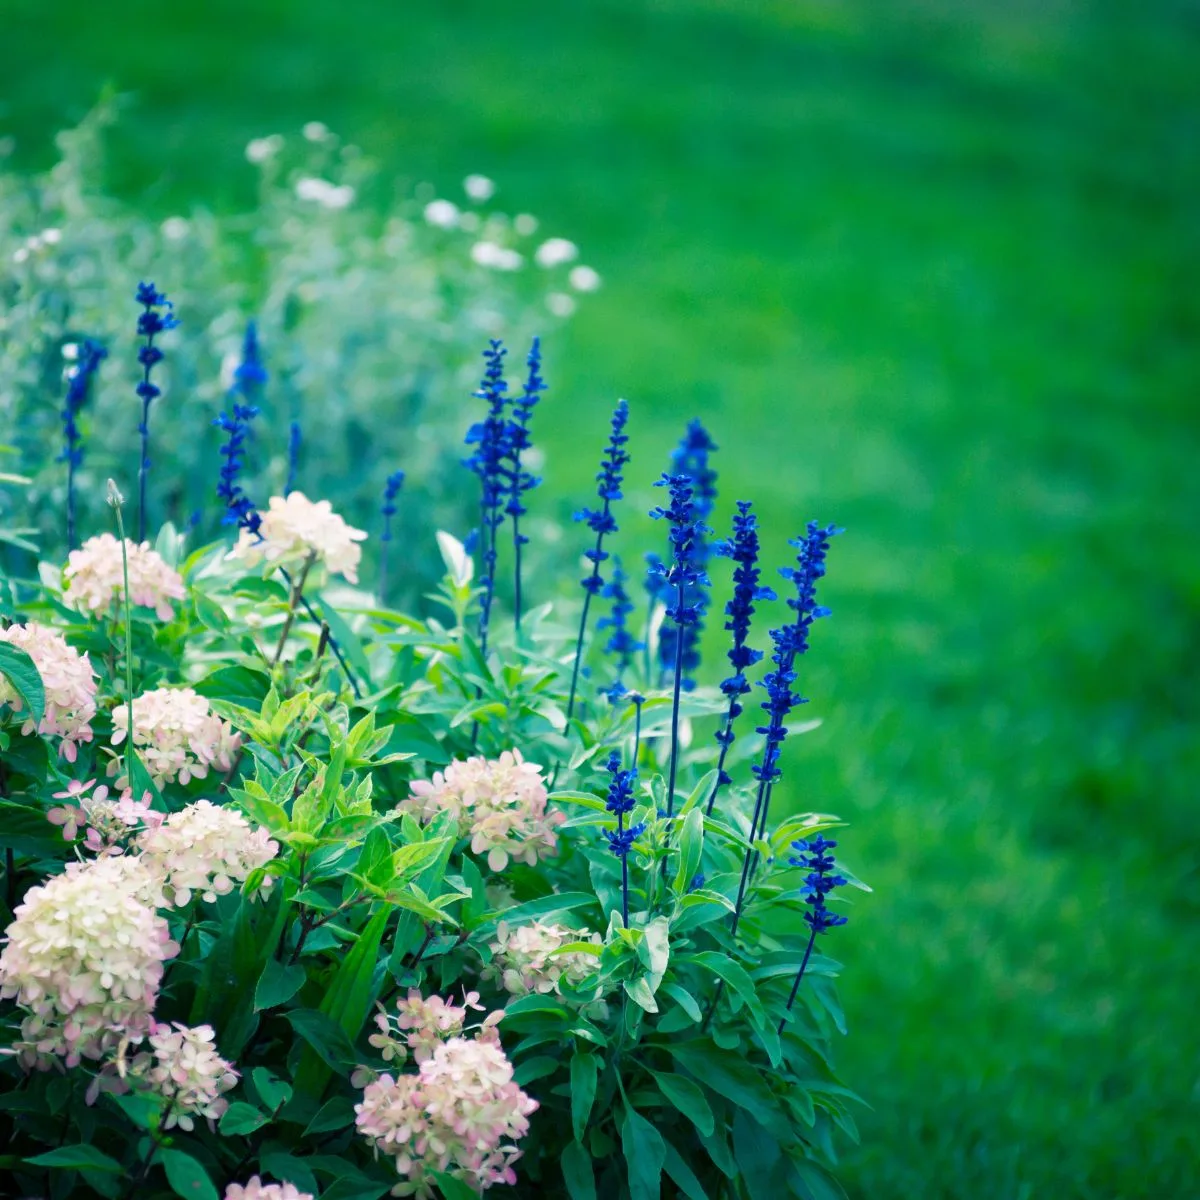 white hydrangeas and blue spiky flowers